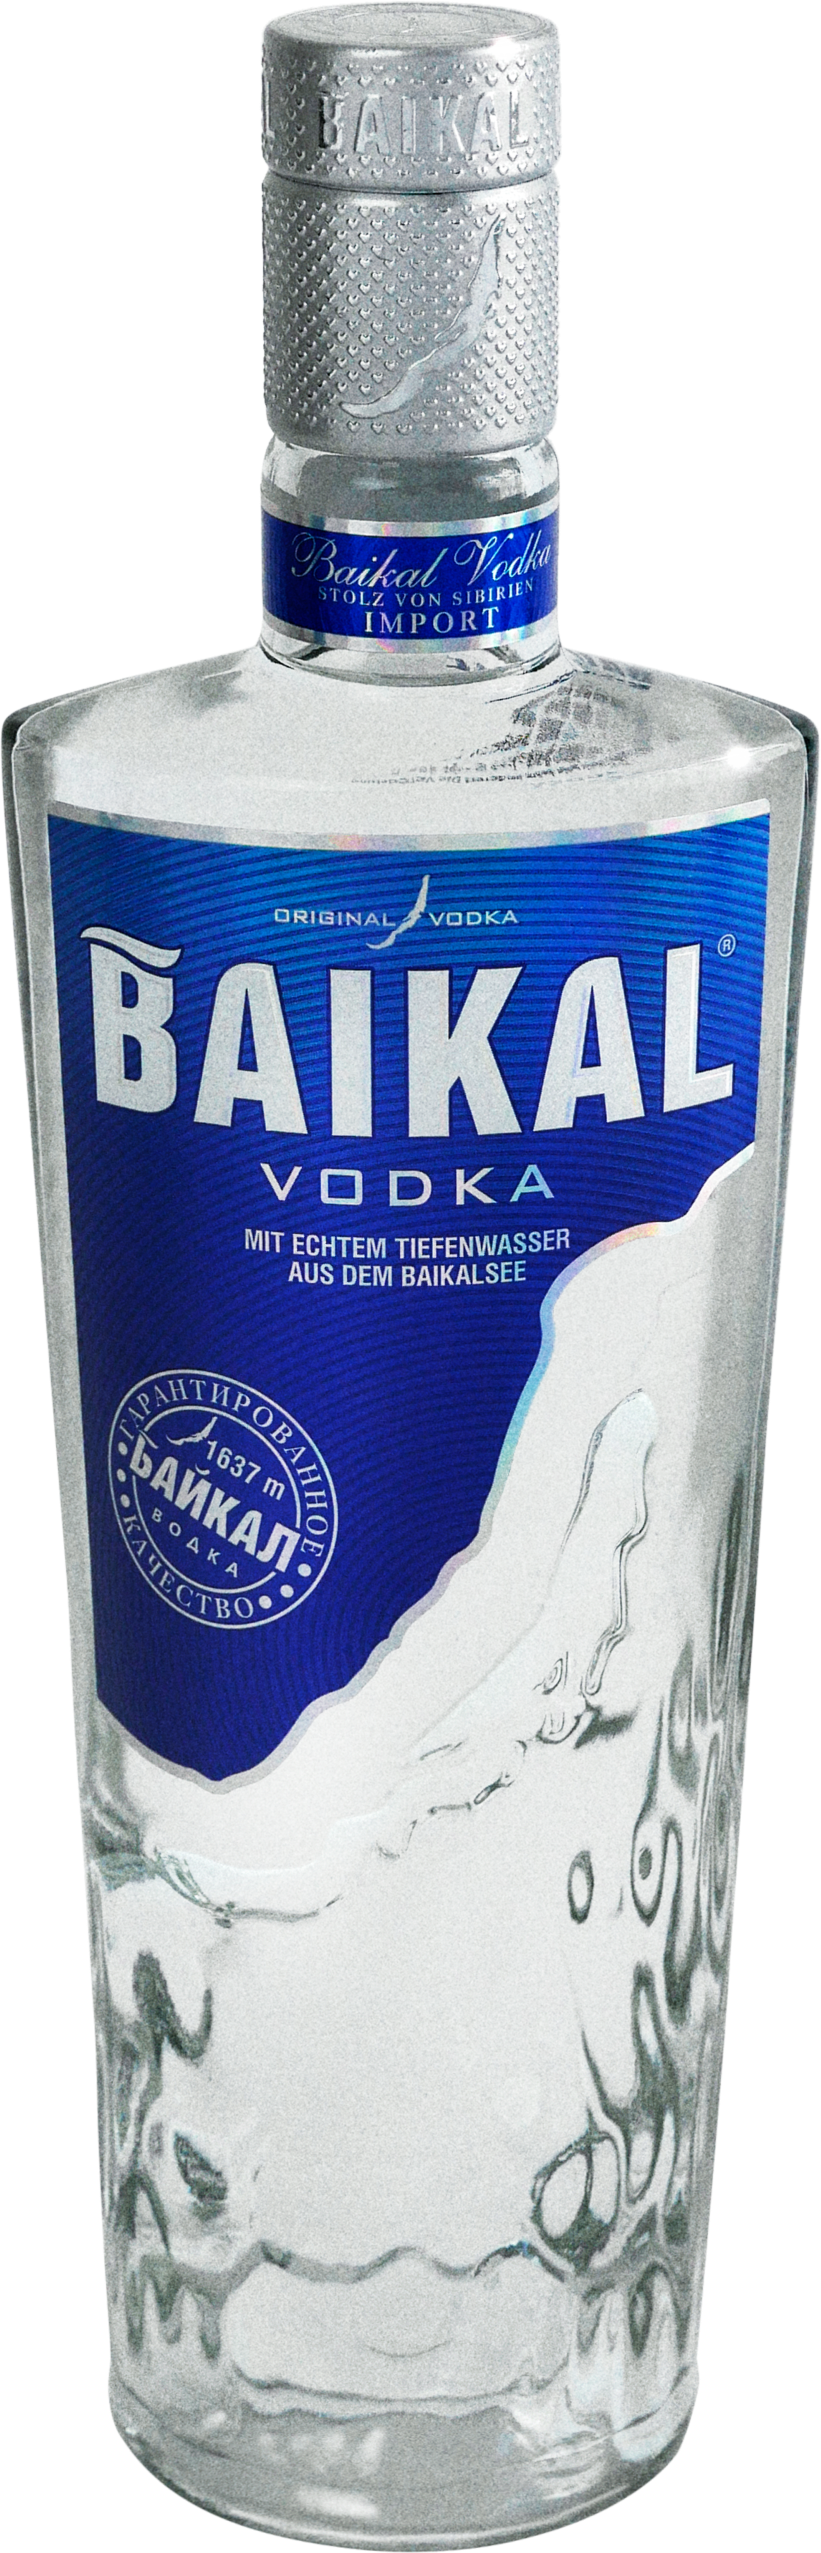 Baikal Vodka 0,7l